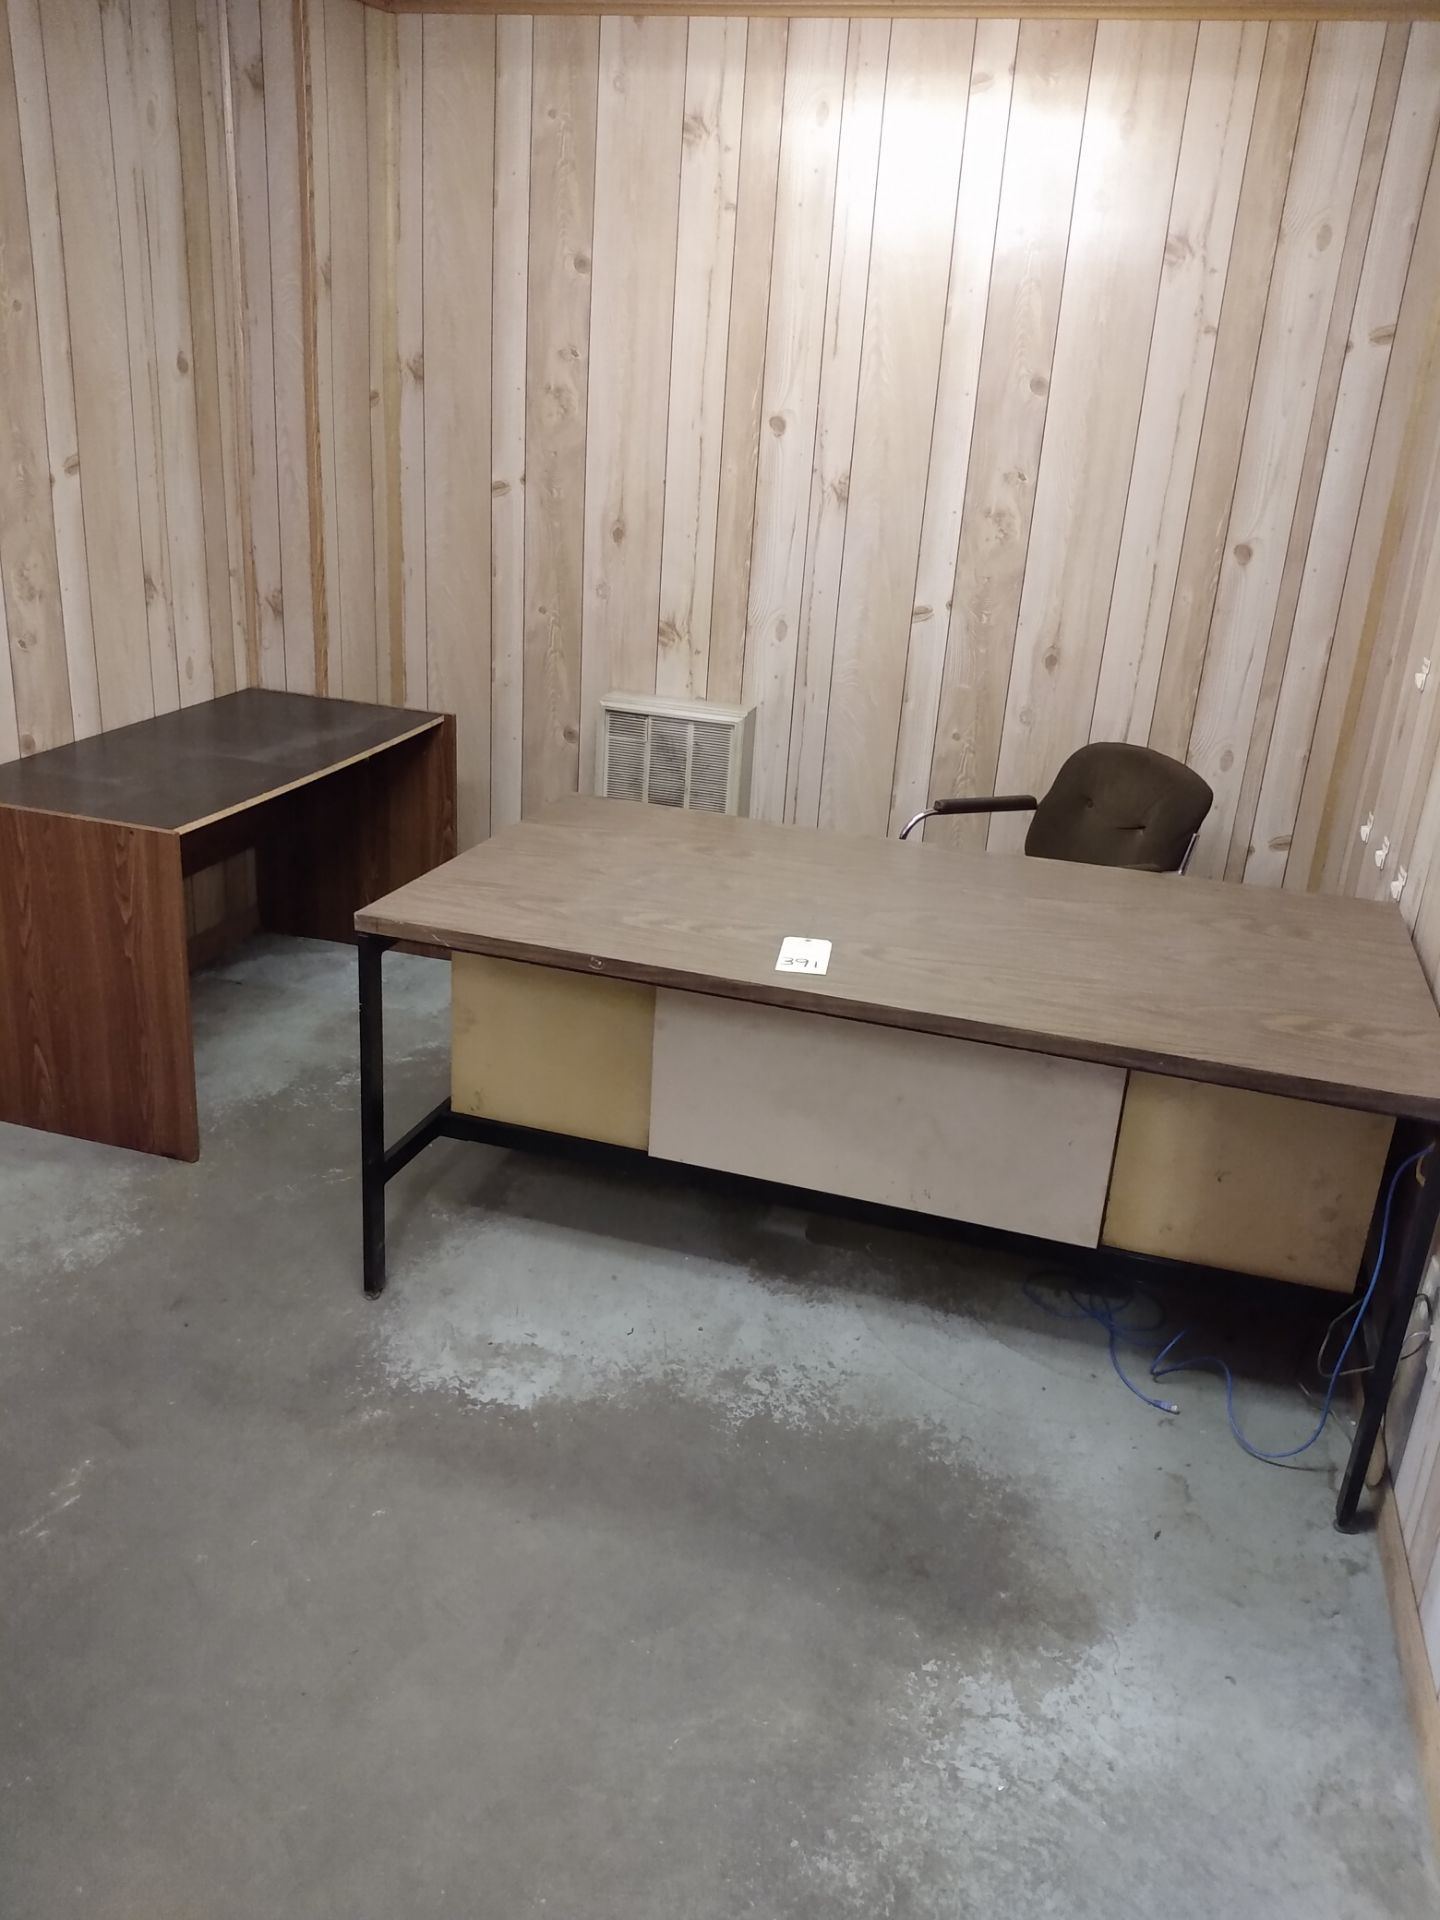 steel shop desk , chair credennza 3'x 5'x29" high - Image 2 of 2